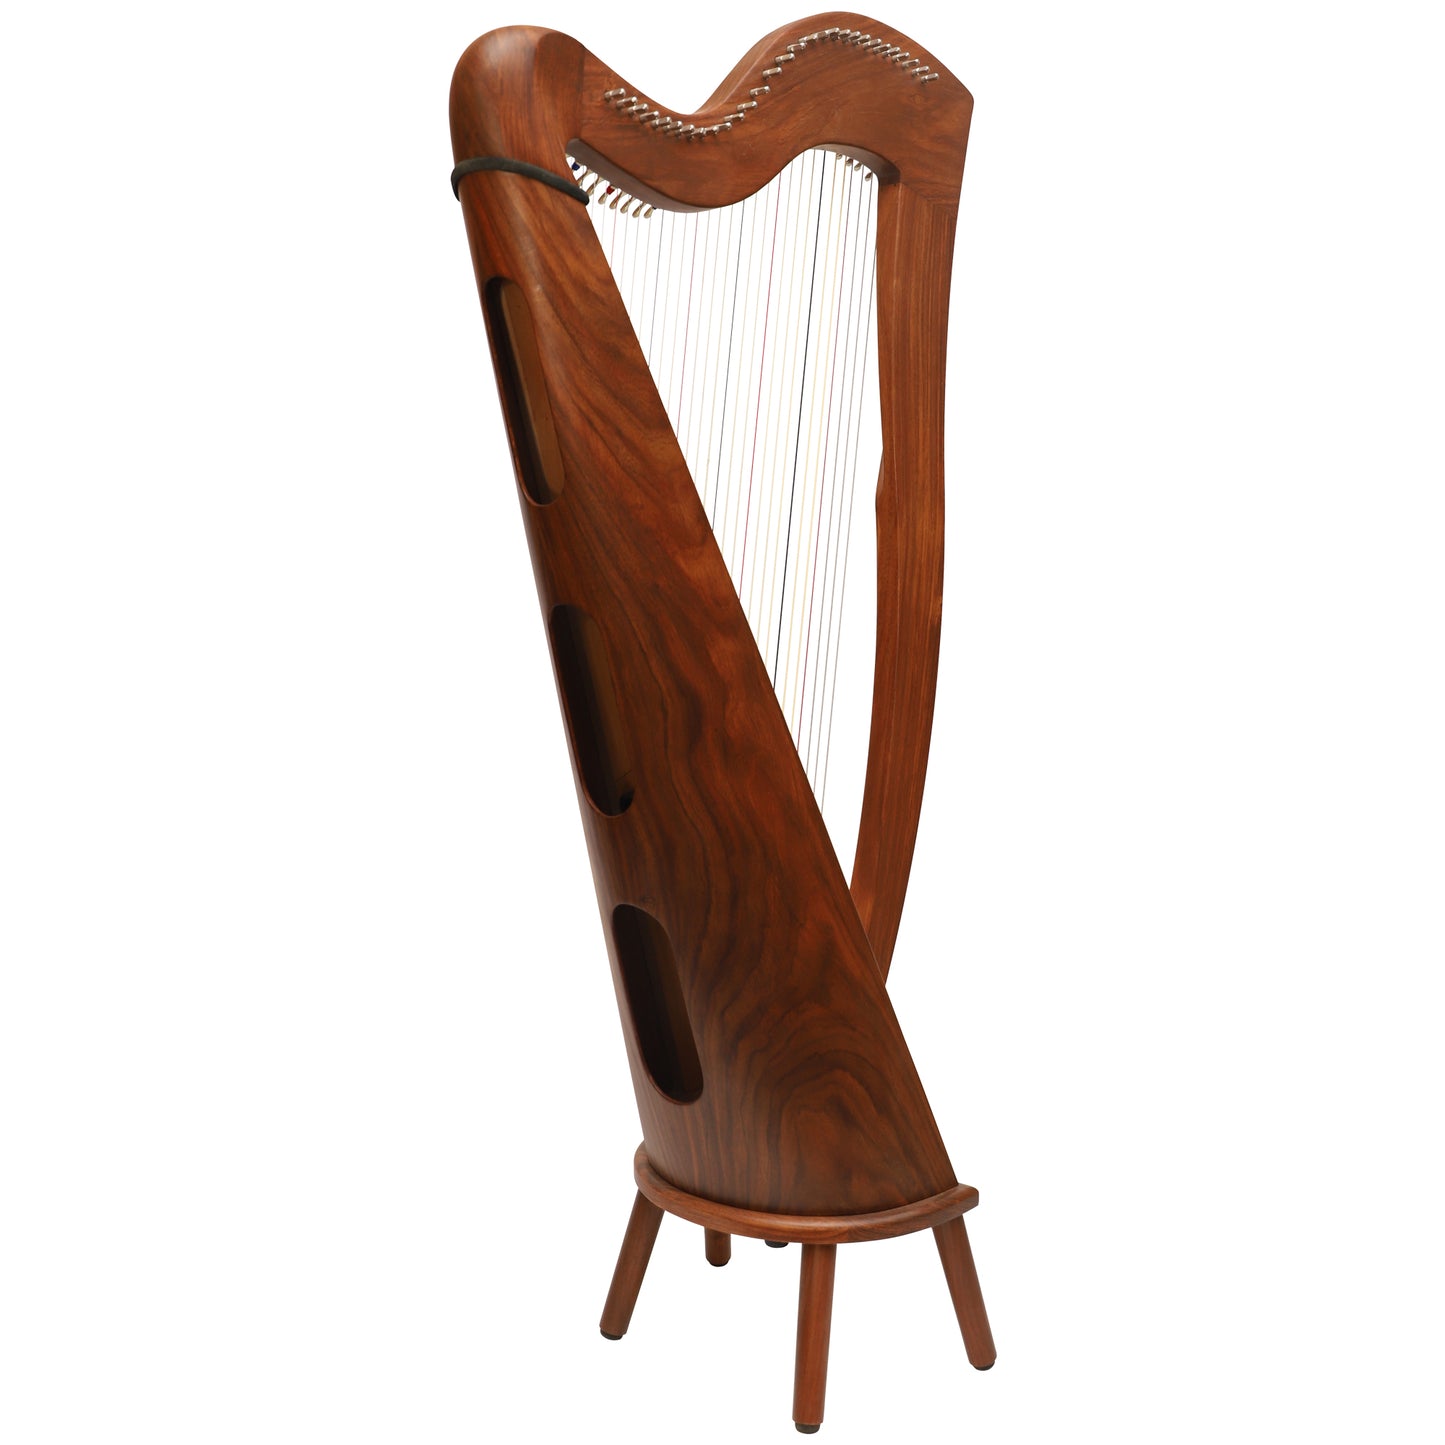 McHugh Harp 29 Strings Rosewood Round Back